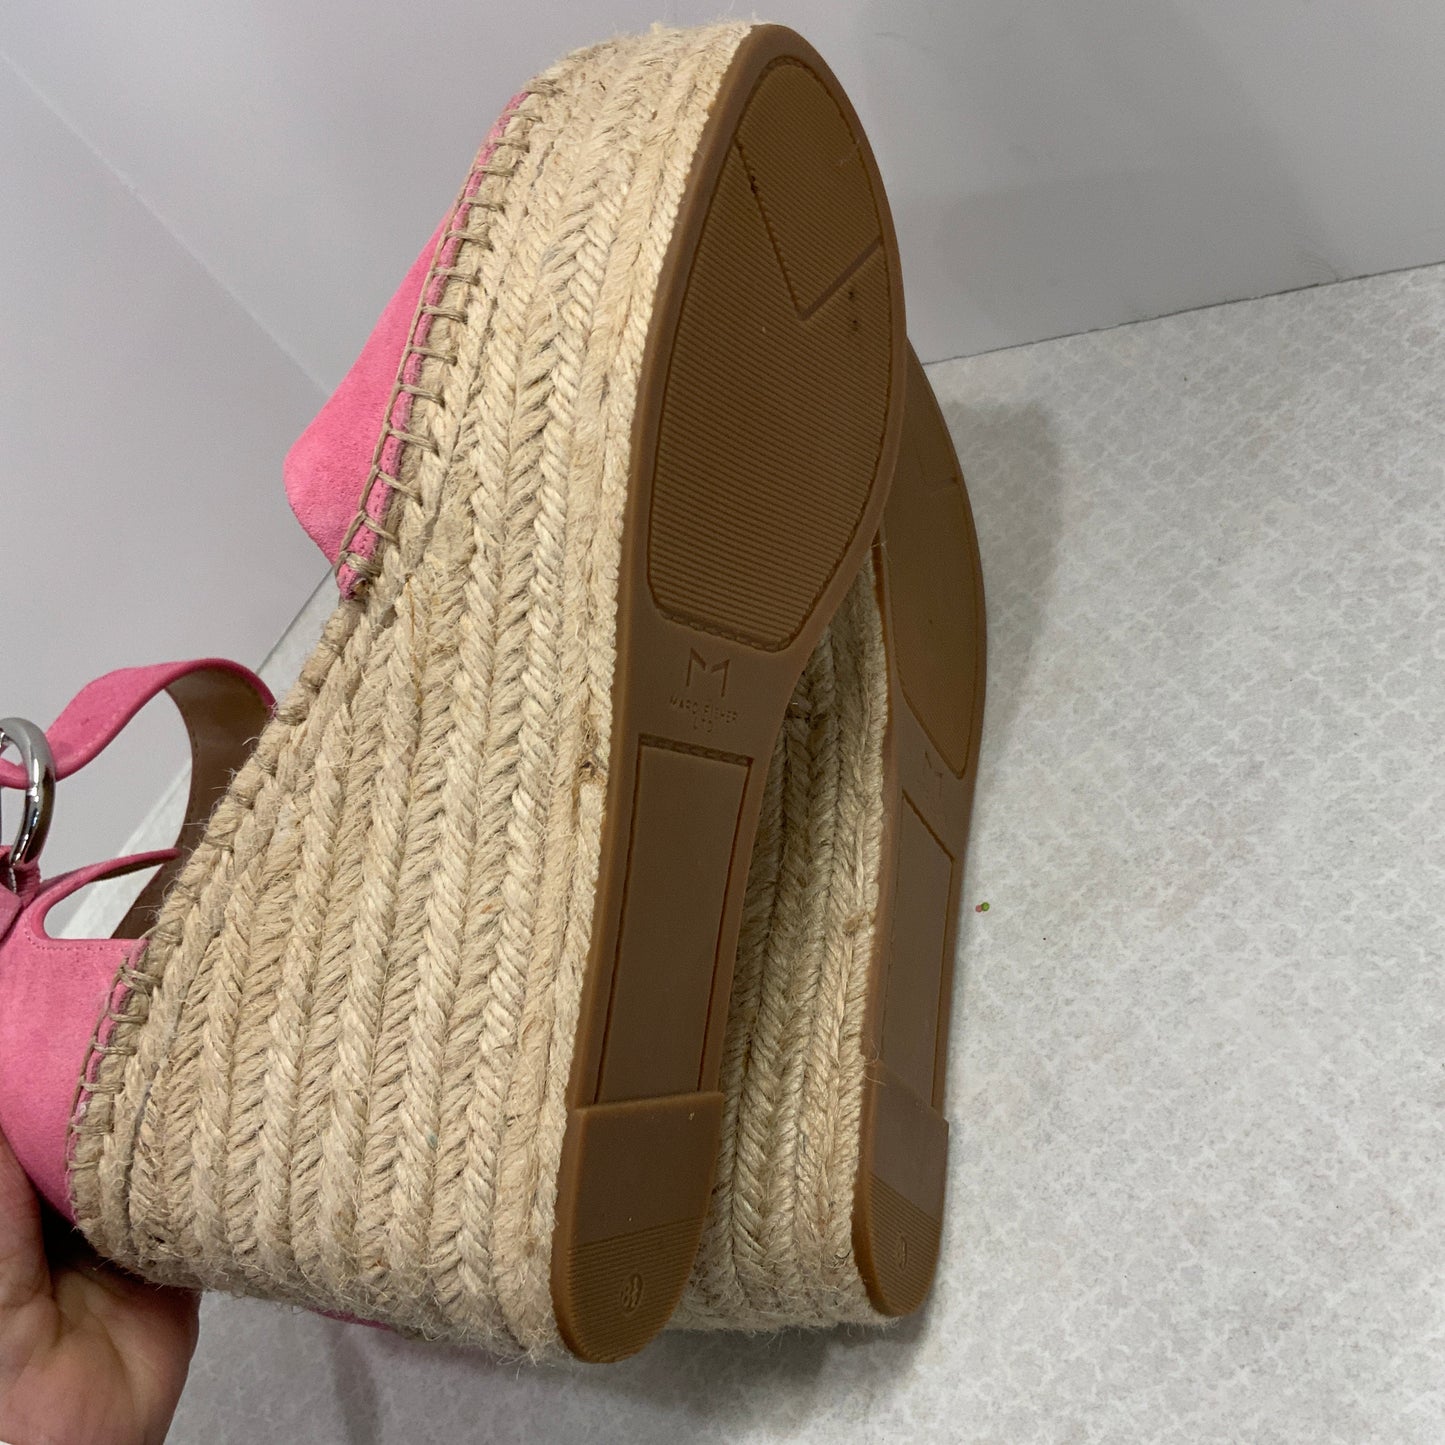 Pink Sandals Heels Wedge Marc Fisher, Size 8.5